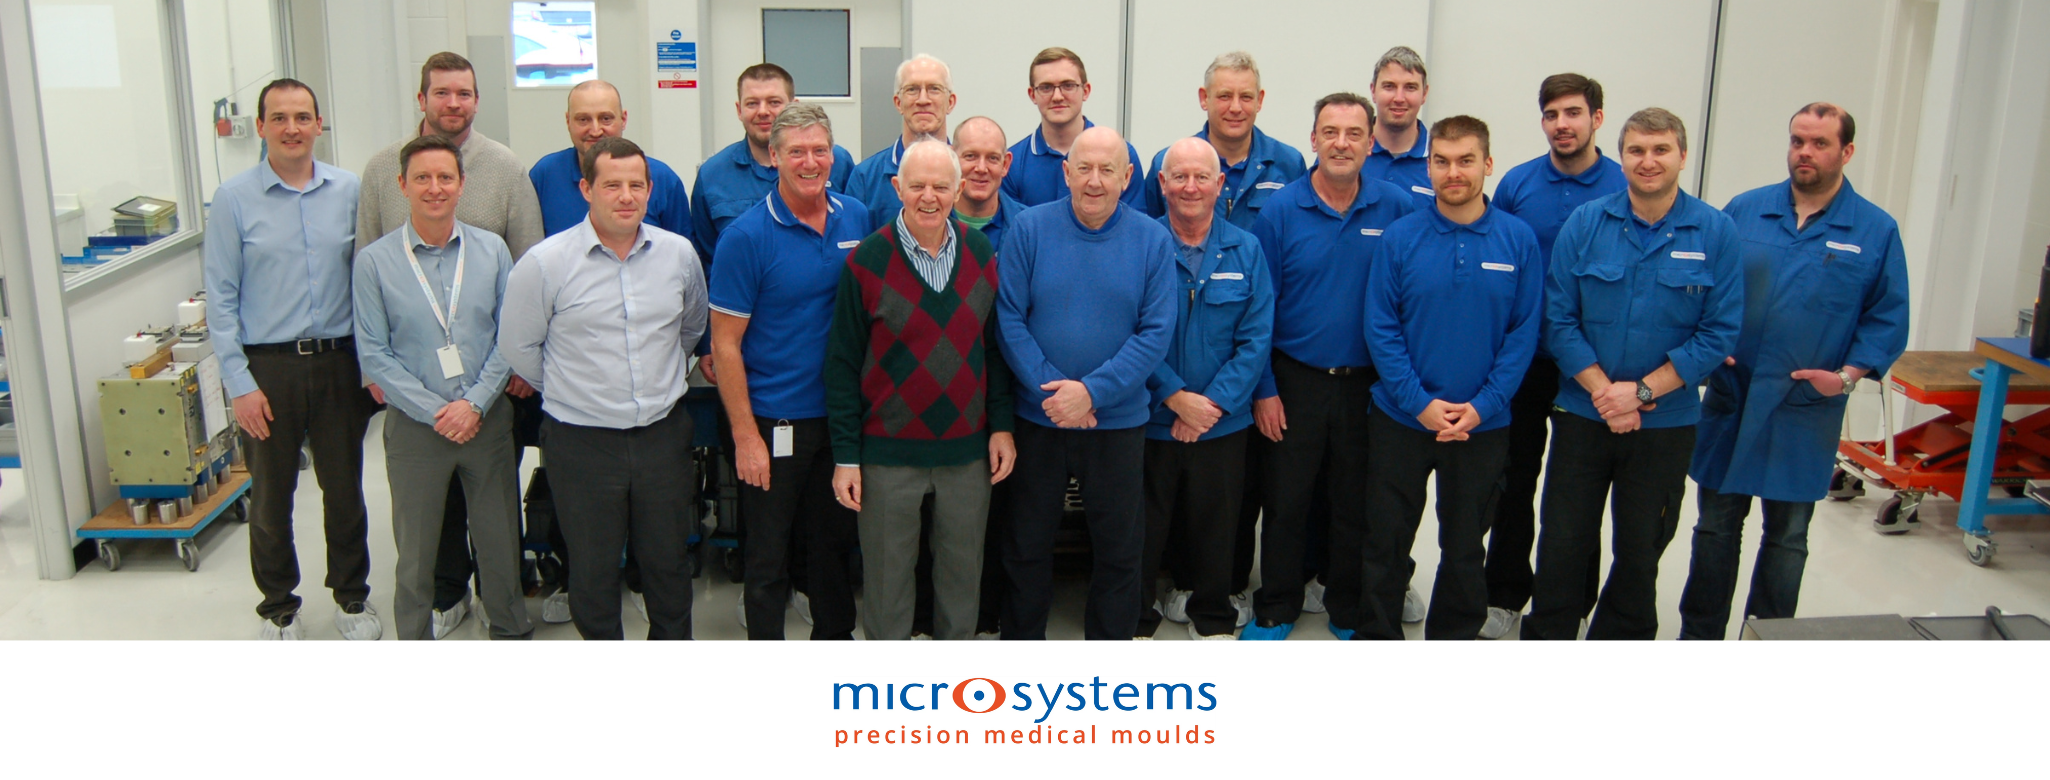 microsystems team